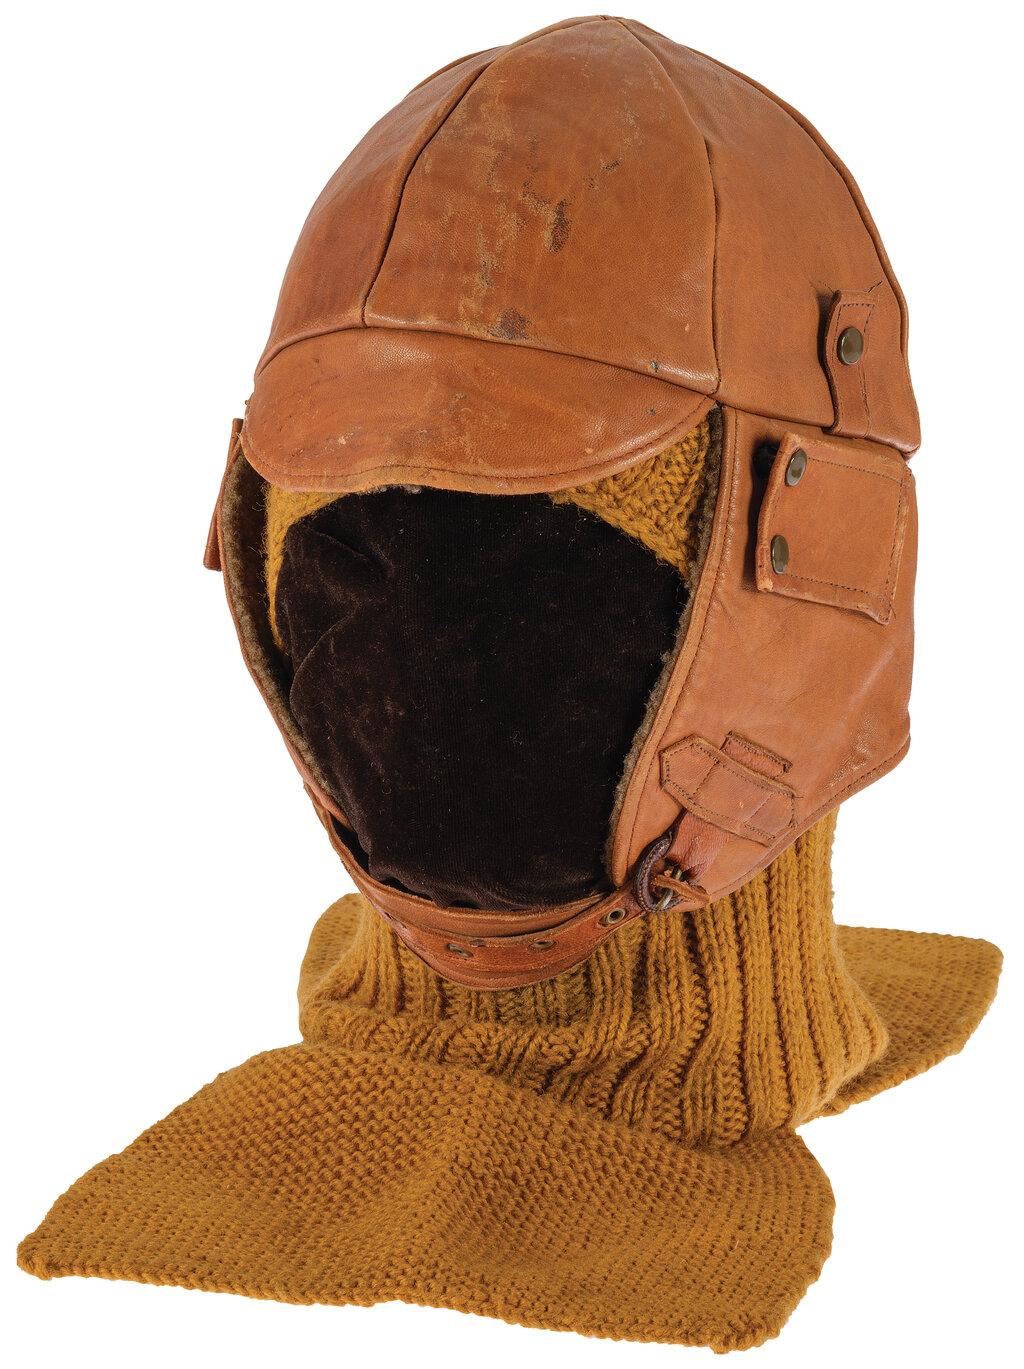 Identified World War I US Army Air Service Leather Flight Helmet